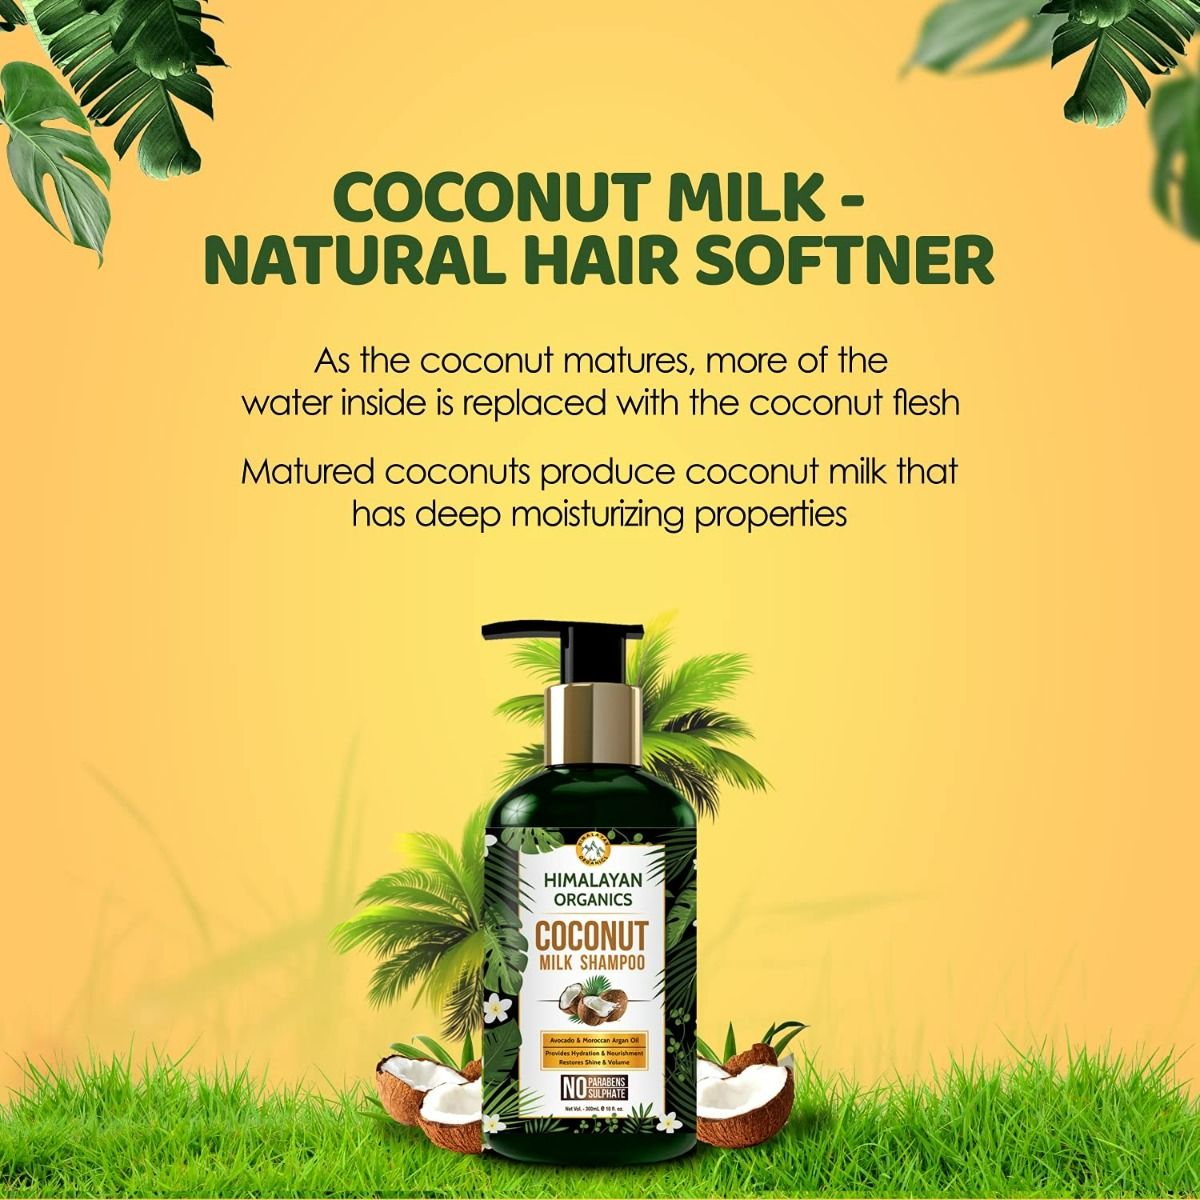 Himalayan Organics Coconut Milk Shampoo, 300 ml, Pack of 1 